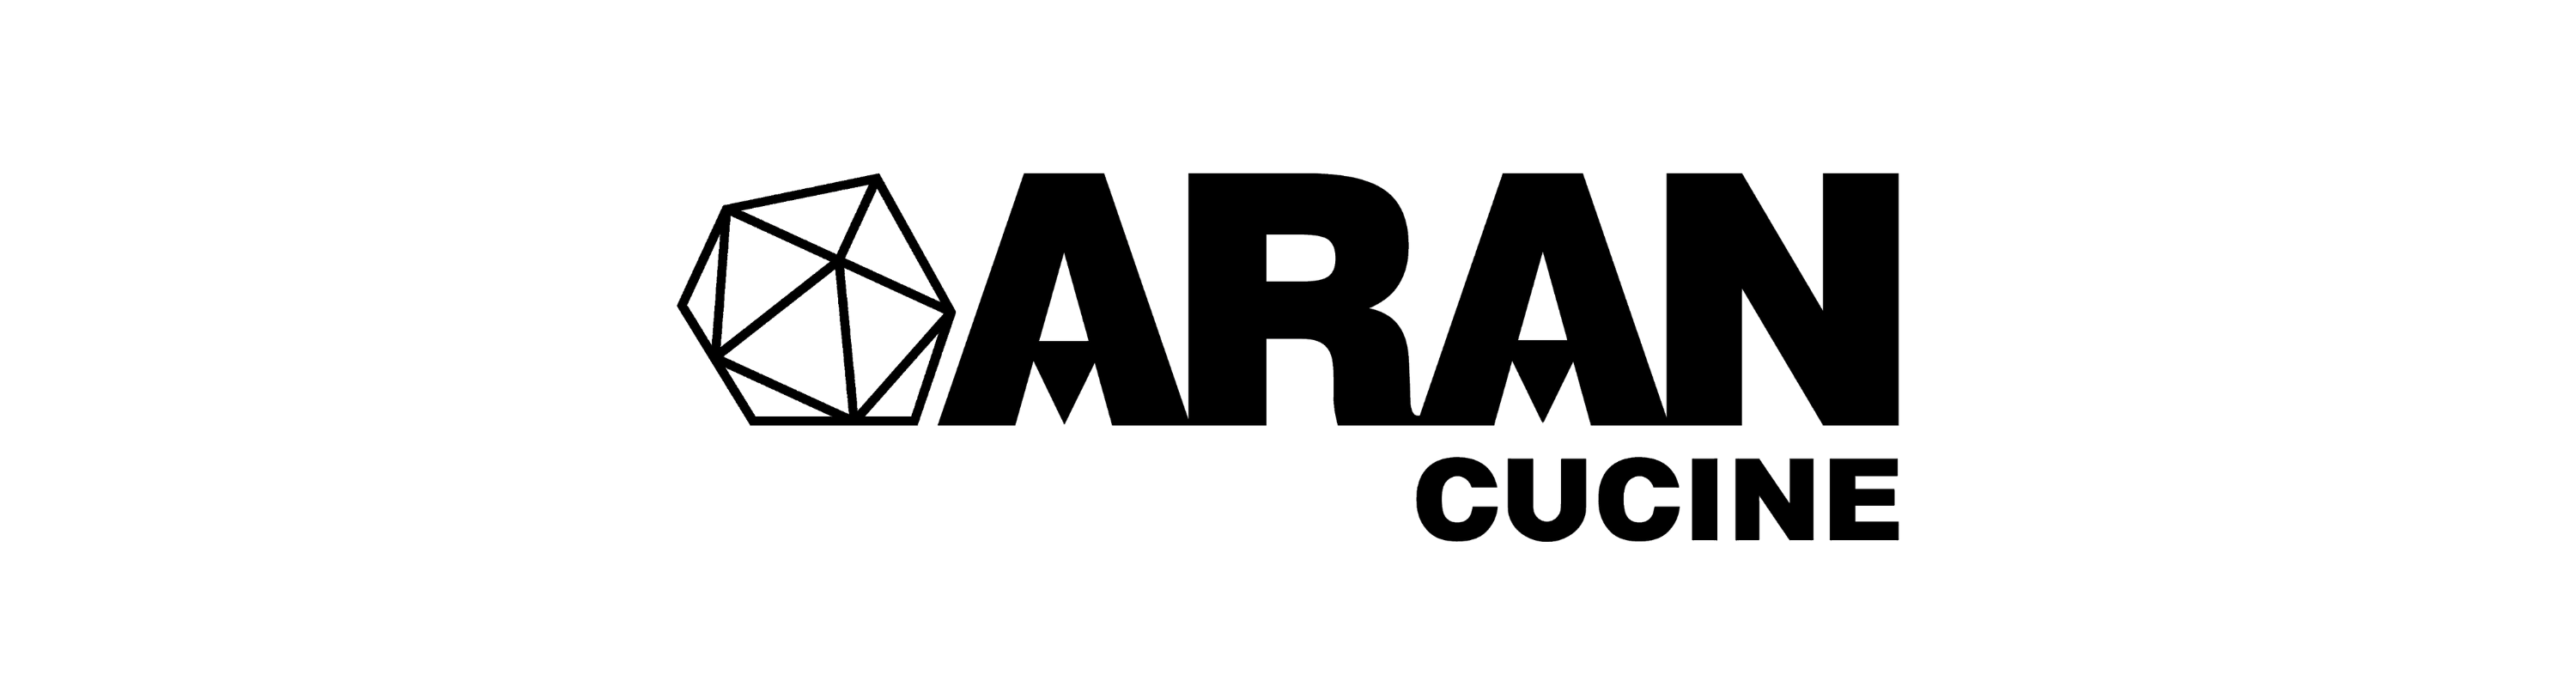 XTRA _ Aran Cucine Logo